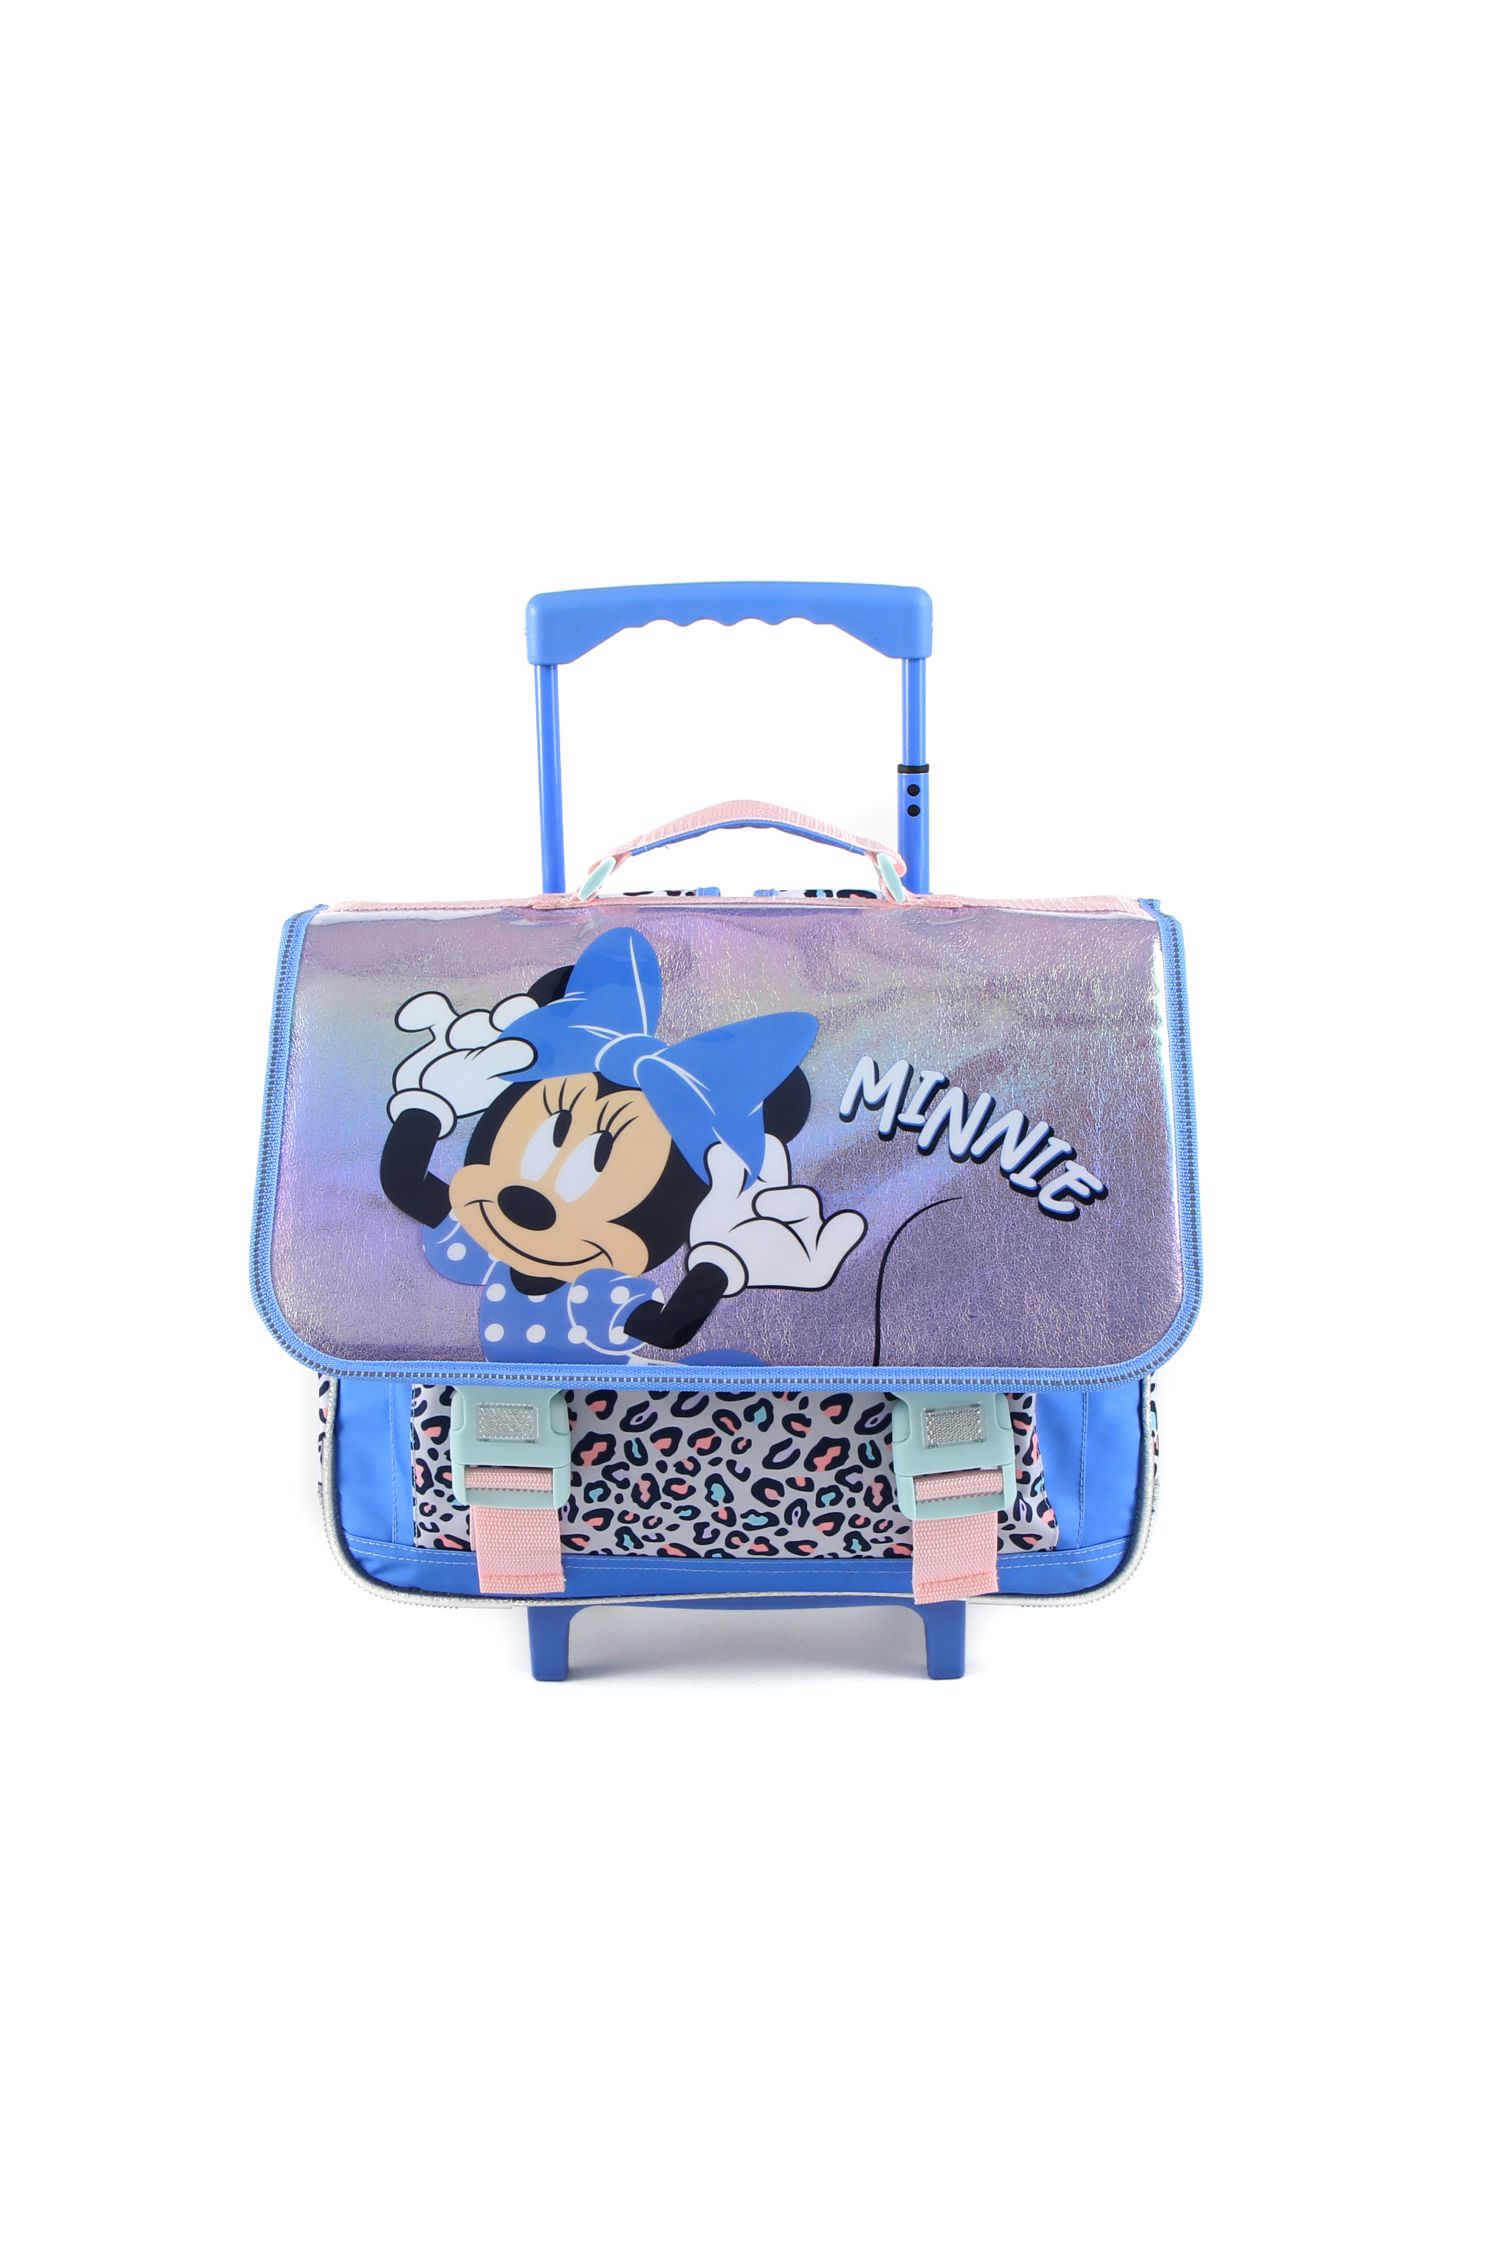 Рюкзак Disney Minnie Mouse Schulranzen Rädern Minnie Leopard 41cm Trolley, синий домик для животных disney minnie 500 400 400мм 50см